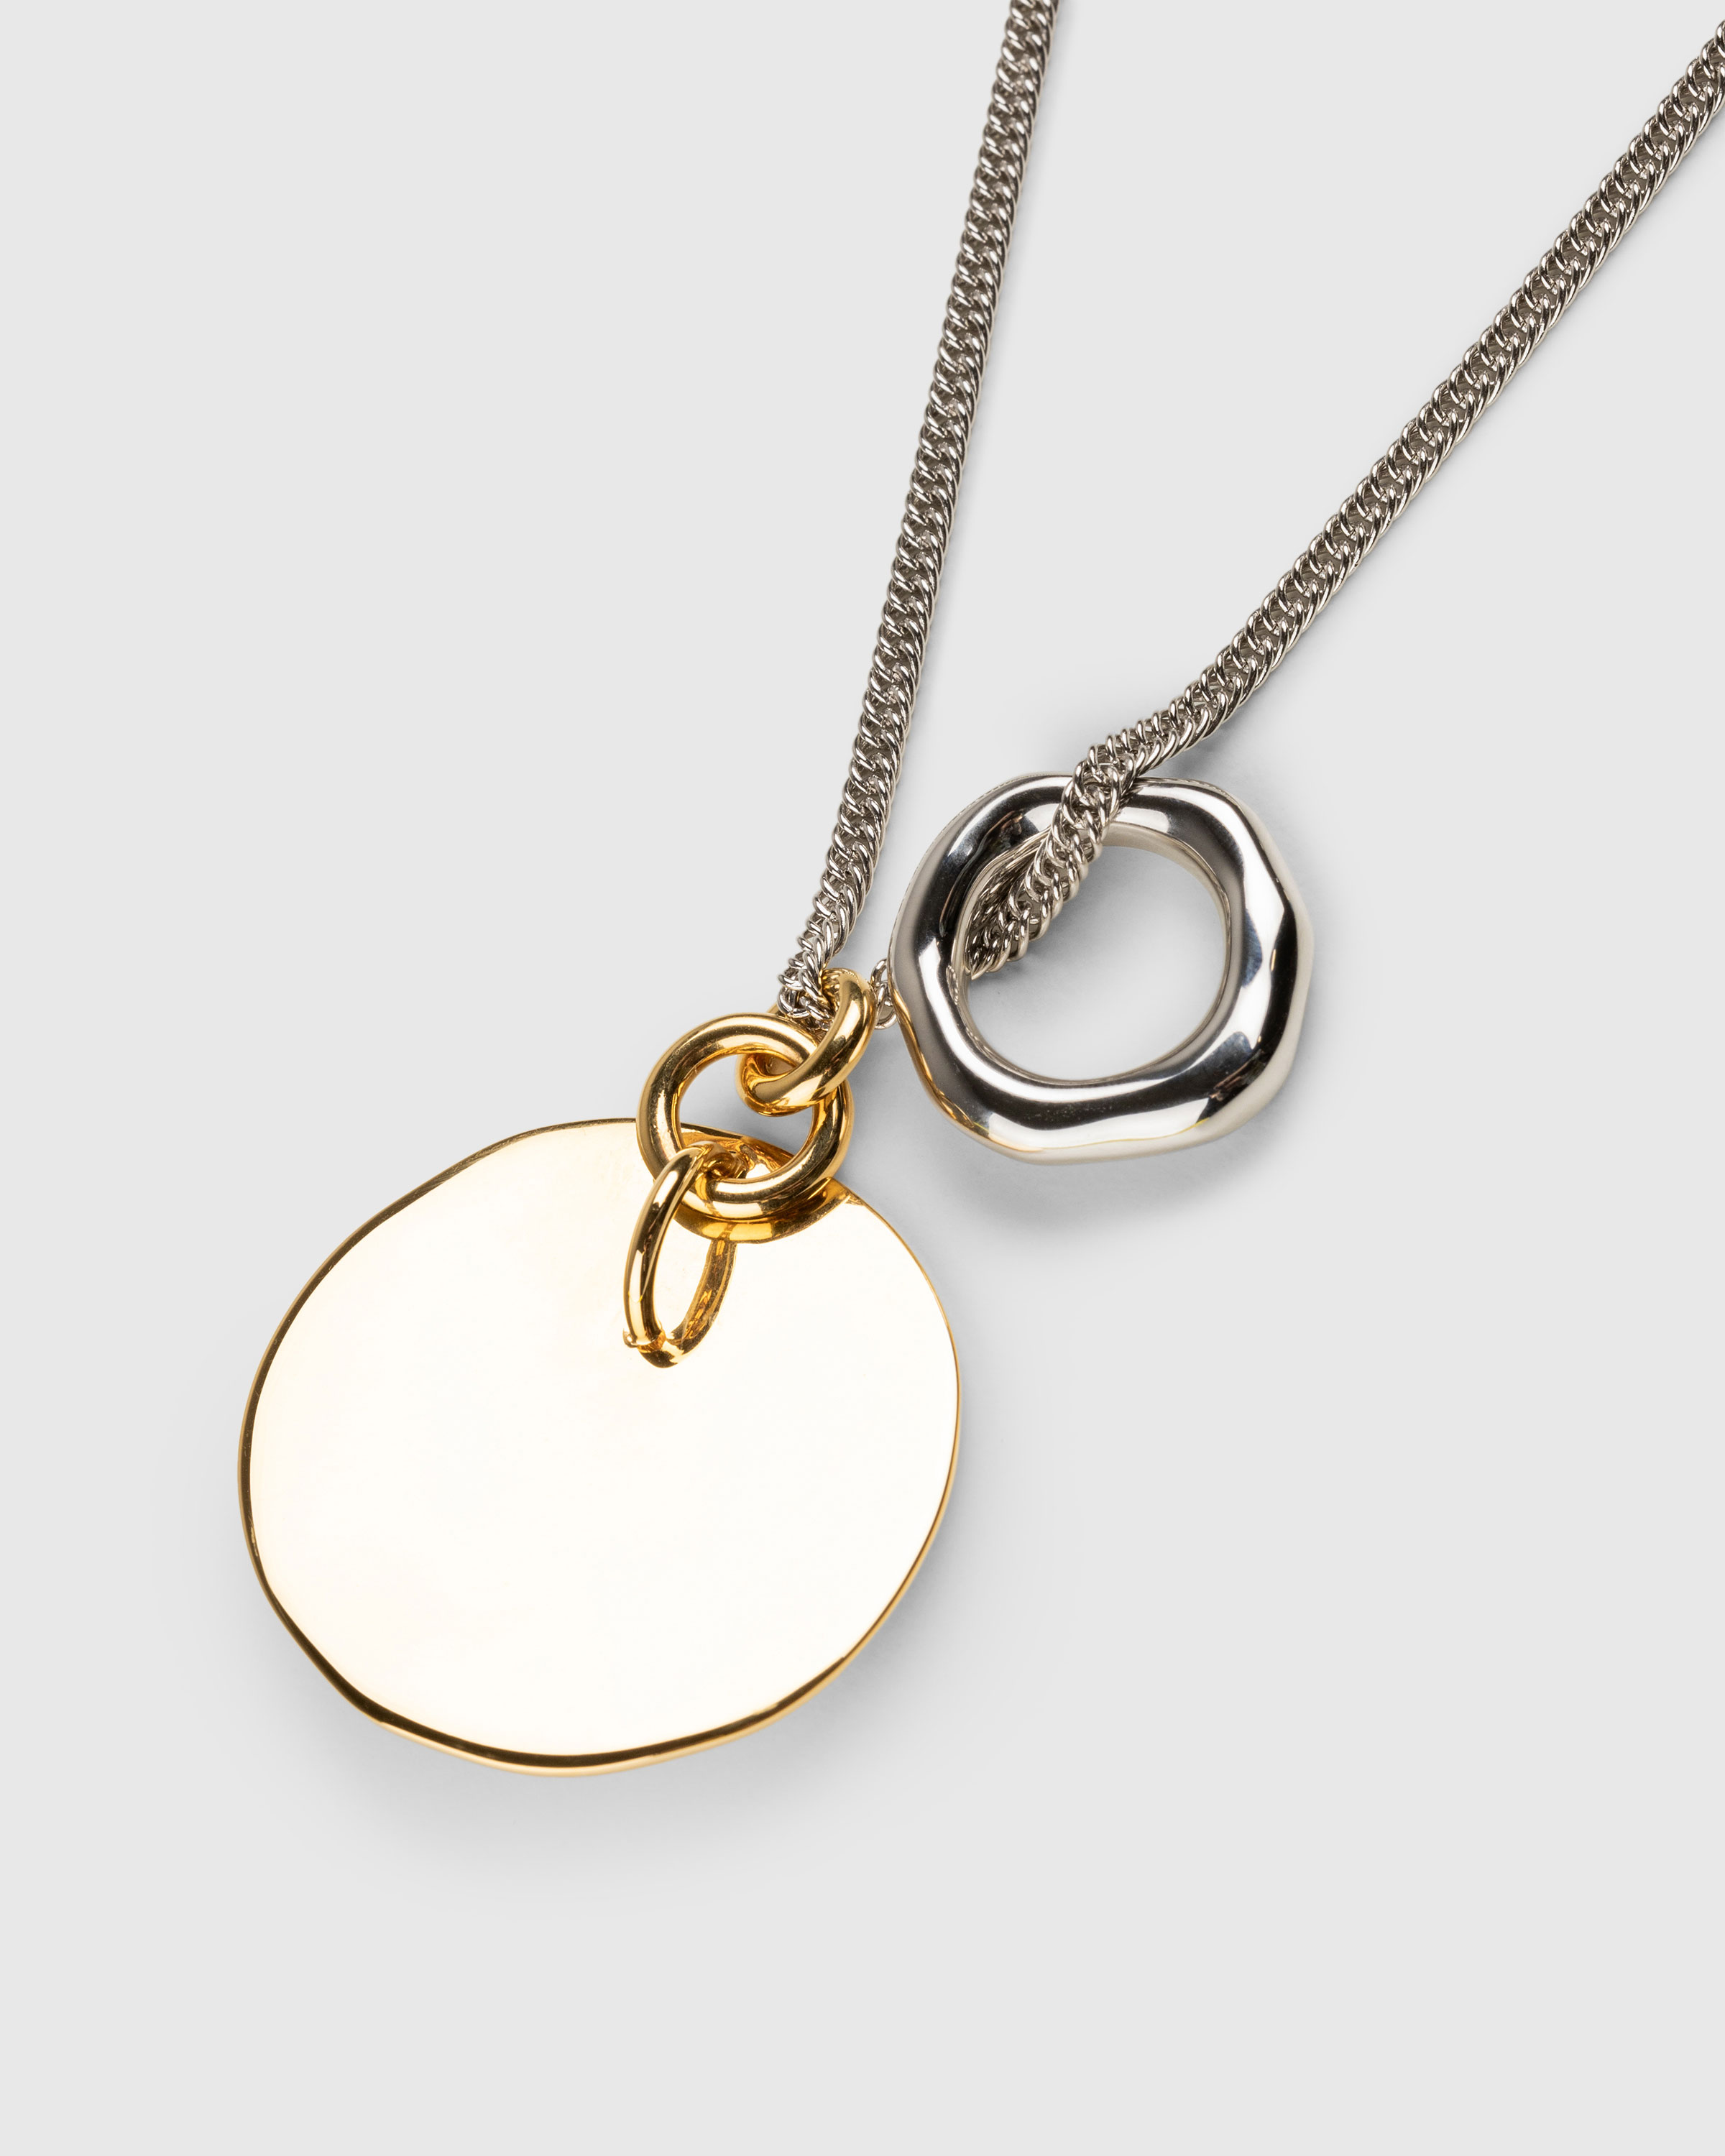 Jil Sander – BM9 Necklace 1 Gold/Silver - Earrings - Gold - Image 6